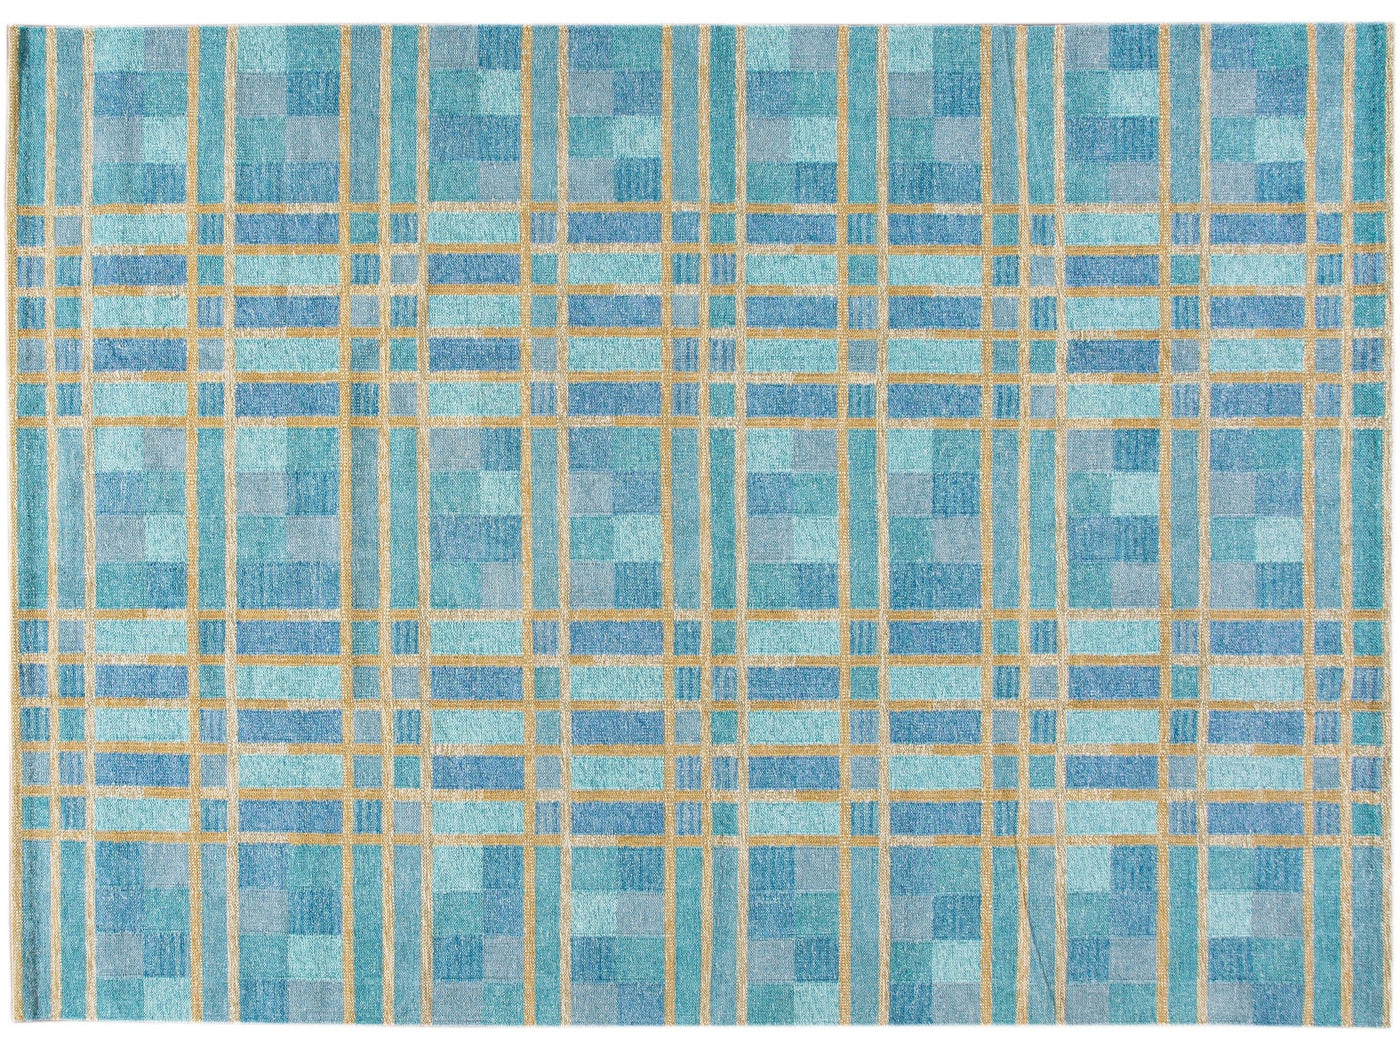 Modern Swedish Style Handmade Geometric Pattern Blue and Yellow Wool Rug